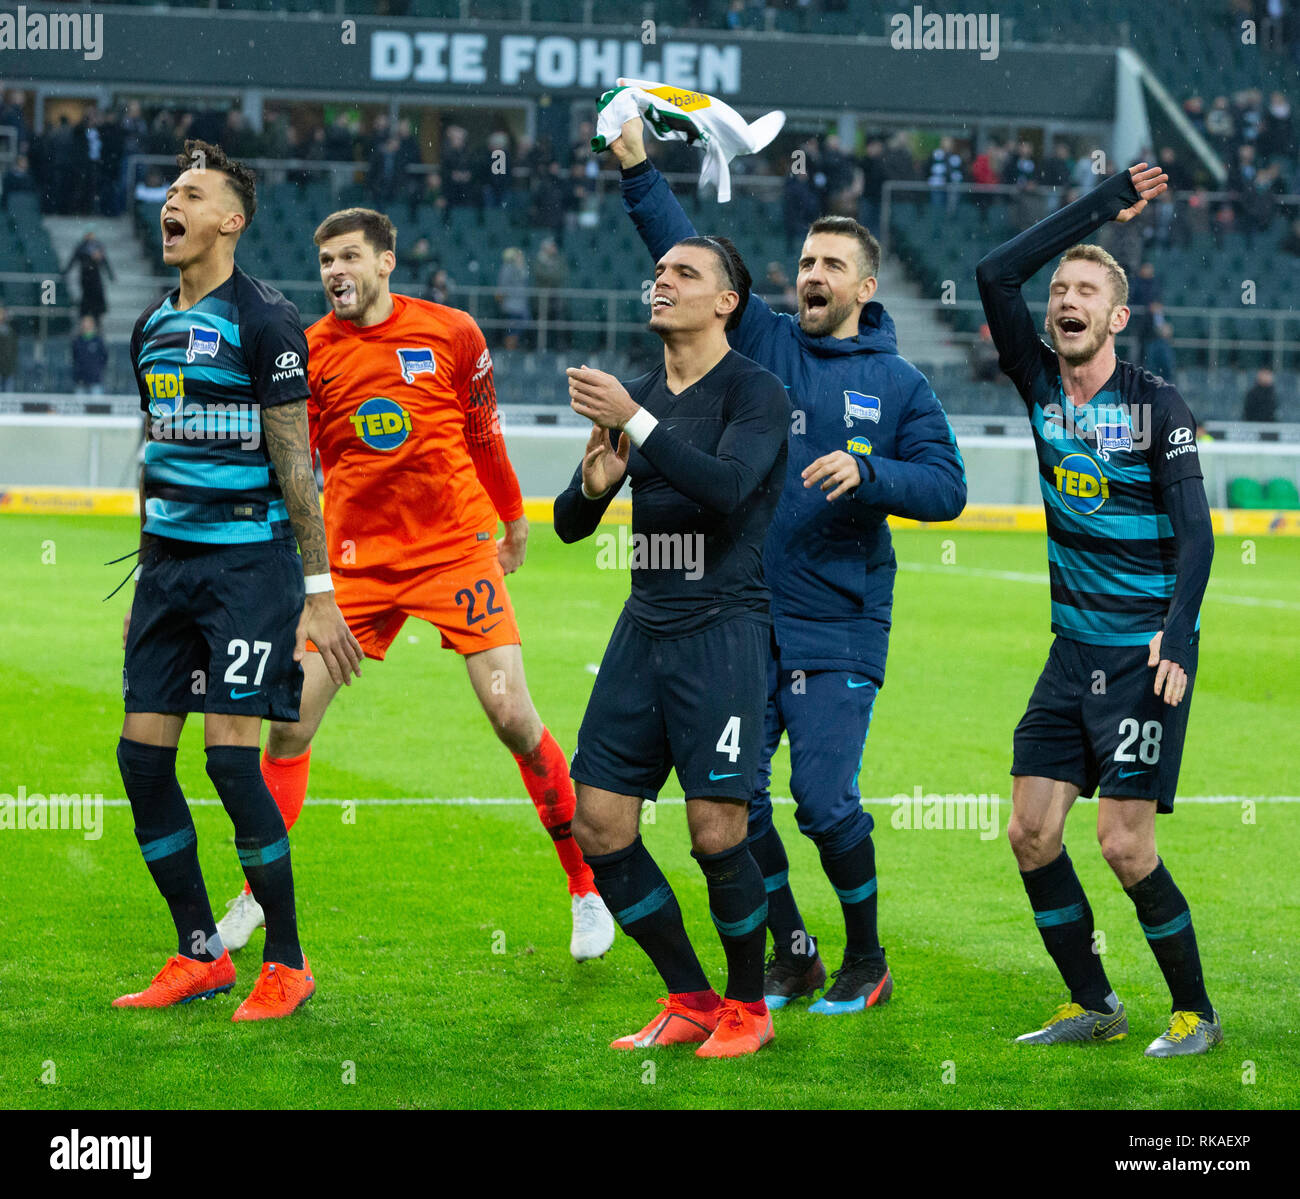 sports, football, Bundesliga, 2018/2019, Borussia Moenchengladbach vs Hertha BSC Berlin 0-3, Stadium Borussia Park, after the game Berlin players and football fans rejoice at the win, f.l.t.r. Davie Selke (Hertha), keeper Rune Jarstein (Hertha), Karim Rekik (Hertha), Vedad Ibisevic (Hertha), Fabian Lustenberger (Hertha), DFL REGULATIONS PROHIBIT ANY USE OF PHOTOGRAPHS AS IMAGE SEQUENCES AND/OR QUASI-VIDEO Stock Photo